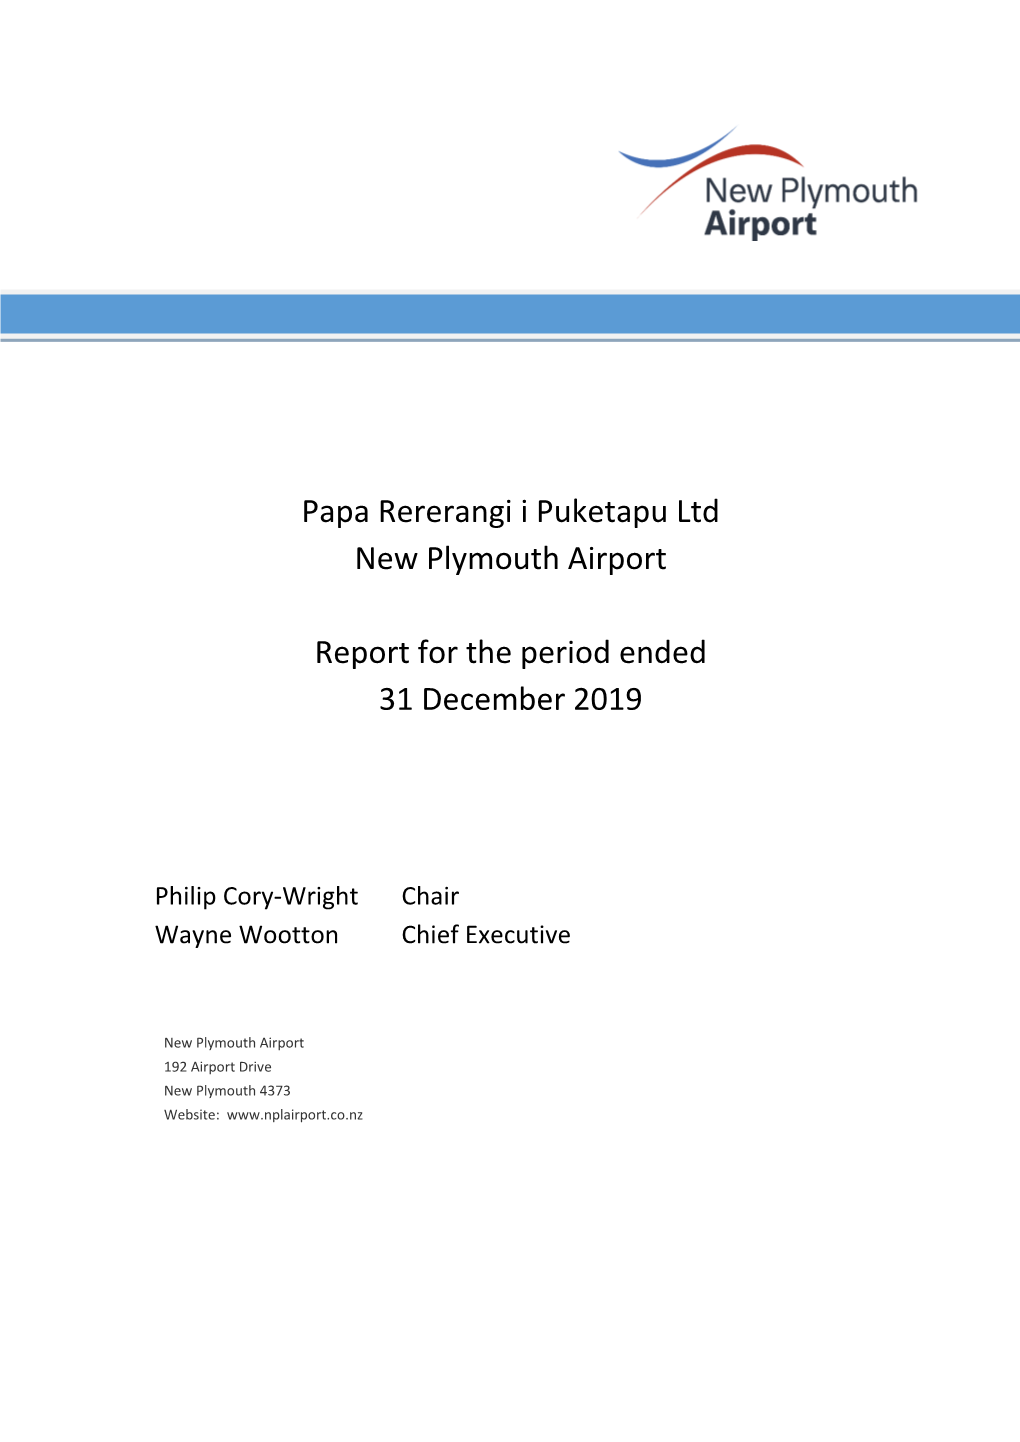 Papa Rererangi I Puketapu Ltd New Plymouth Airport Report for The